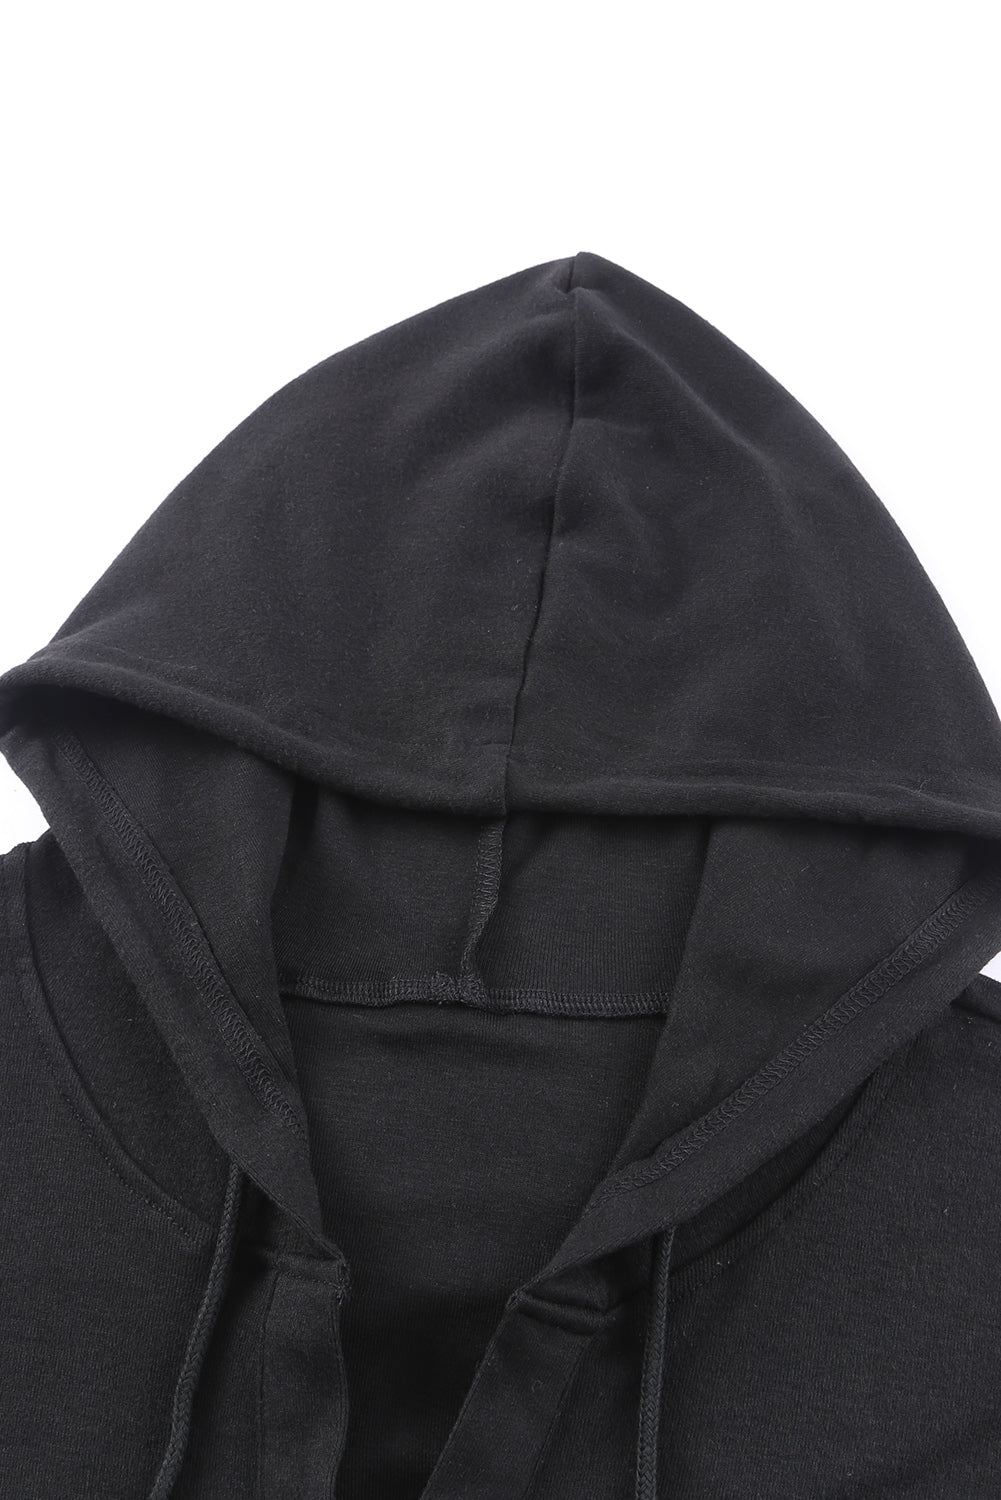 Black Buttoned High and Low Hem Hoodie Sweatshirts & Hoodies JT's Designer Fashion